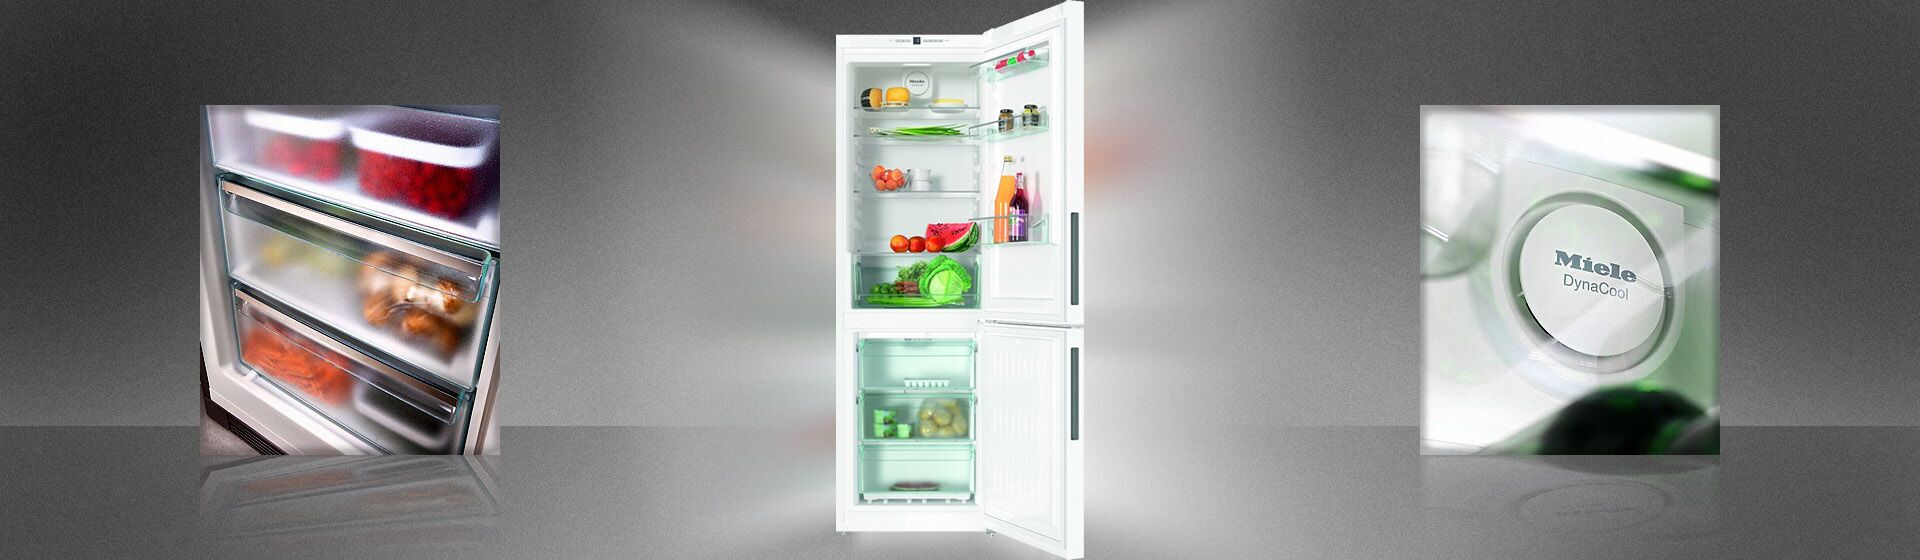 Обзор стильного холодильника KFN 28132D WS от Miele